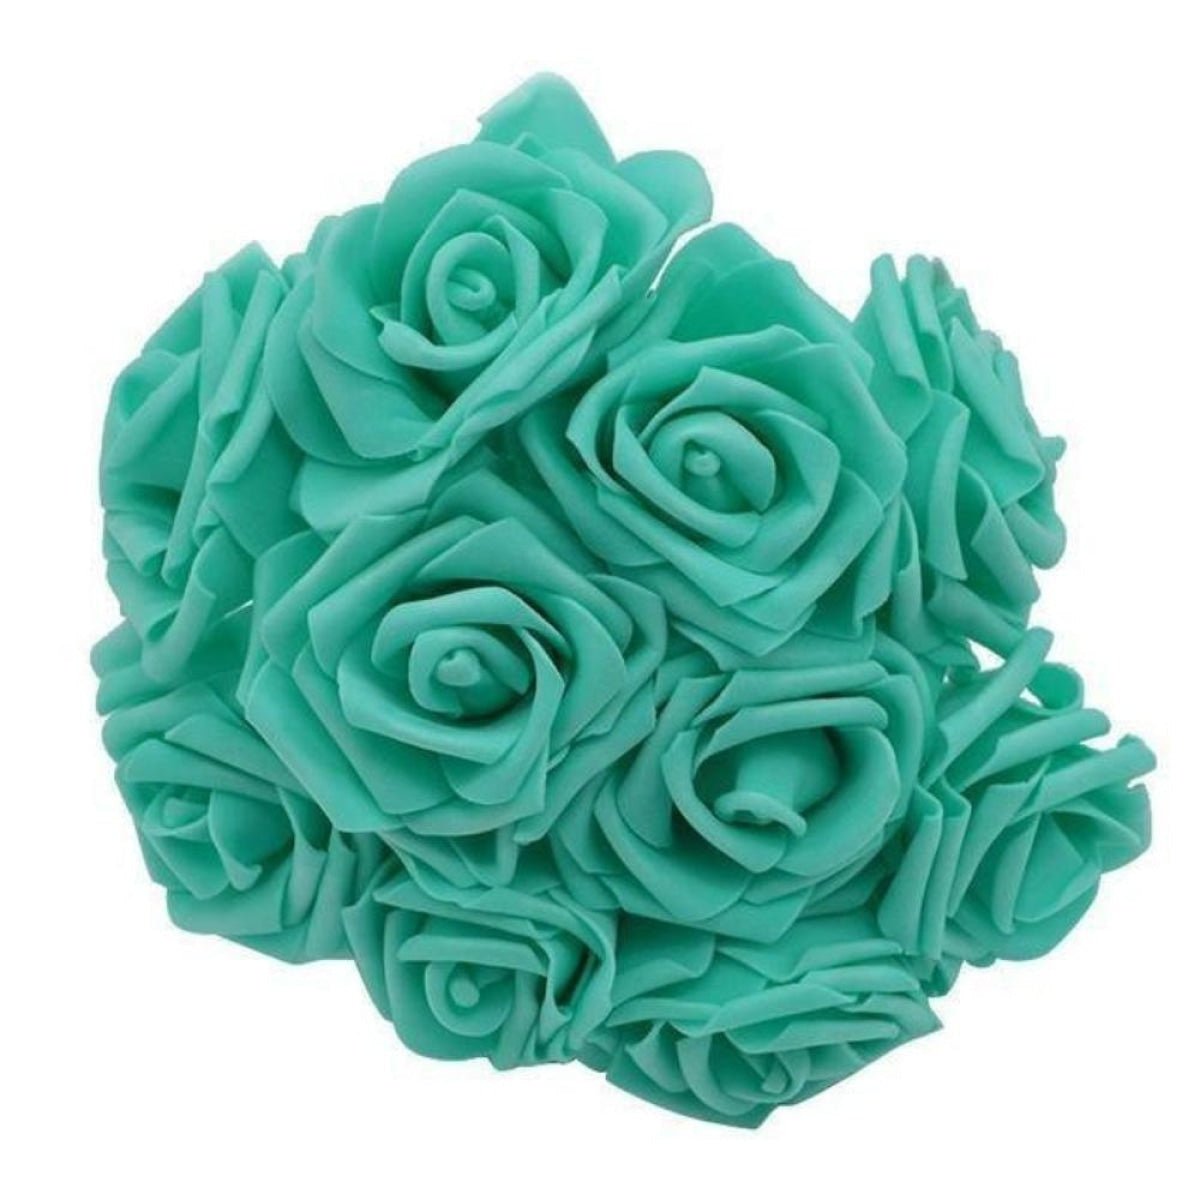 20pcs 8cm Artificial Flowers Foam Rose Fake Bride Bouquet Wedding - Teal - - Asia Sell